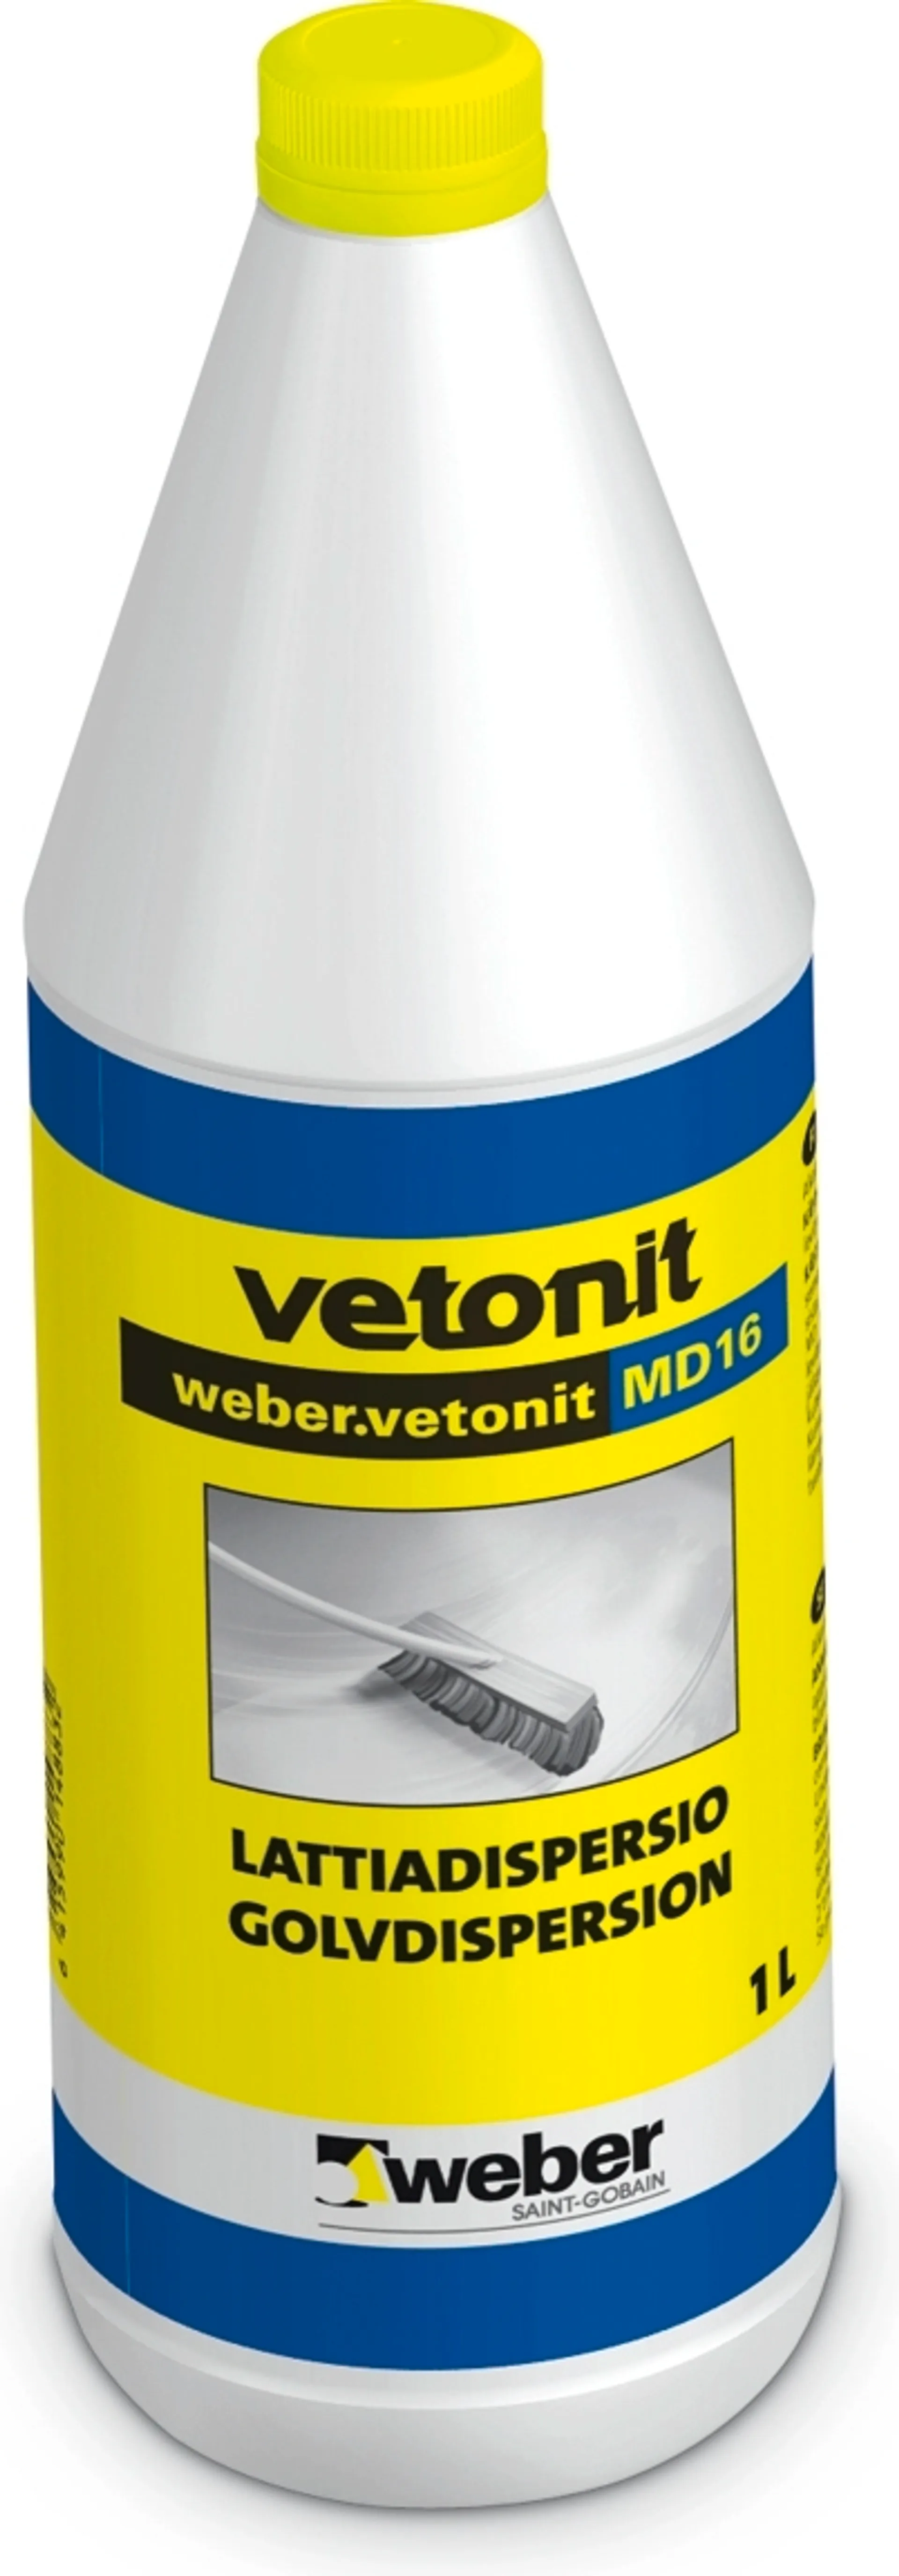 Weber Vetonit MD16 dispersio 1l